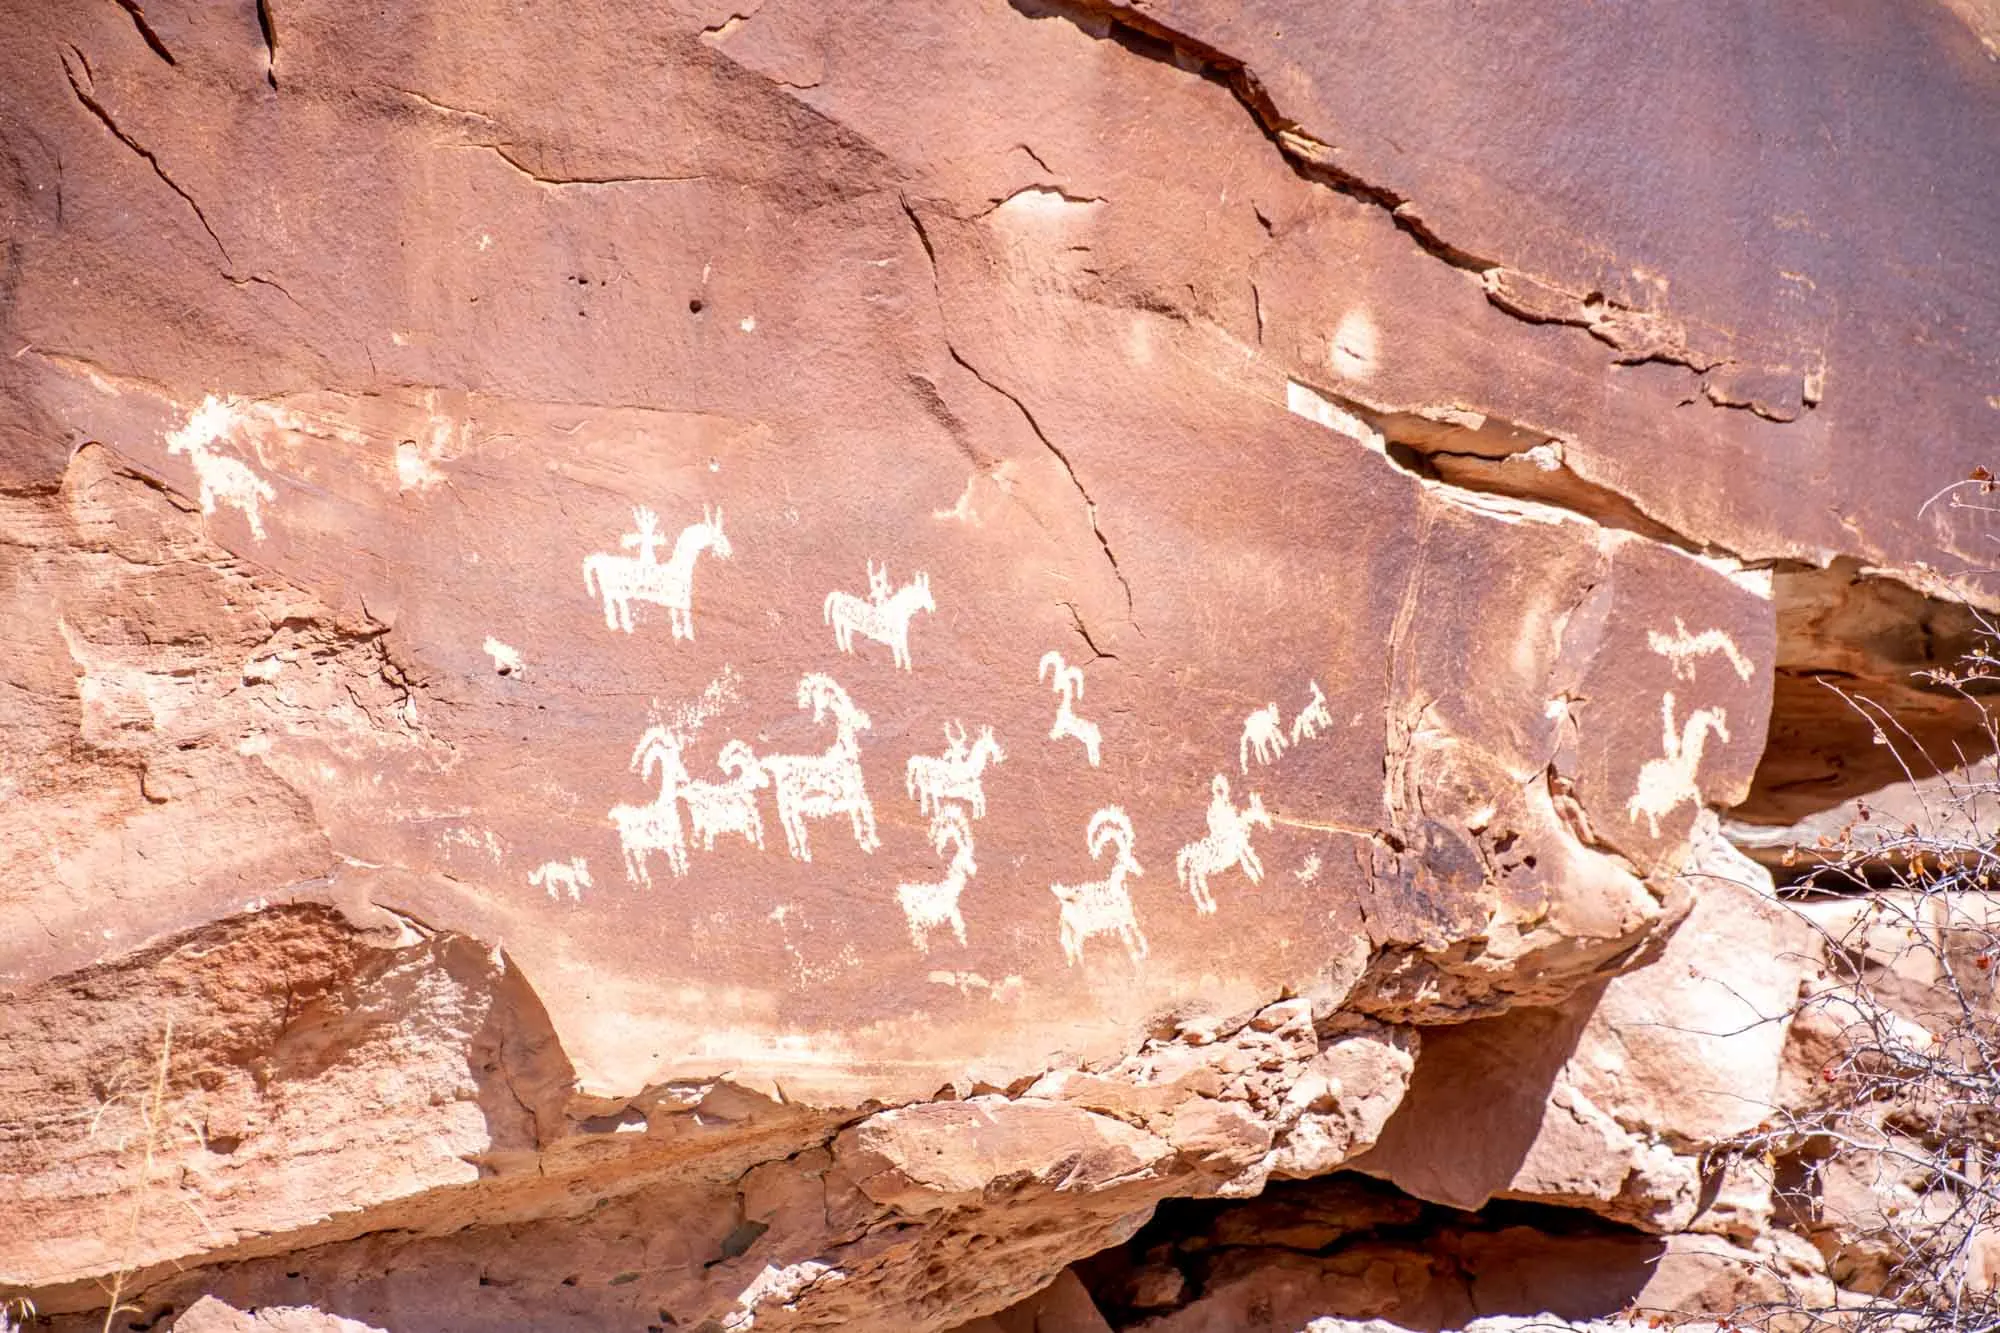 Native American petroglyphs on sandstone in the Utah national parks